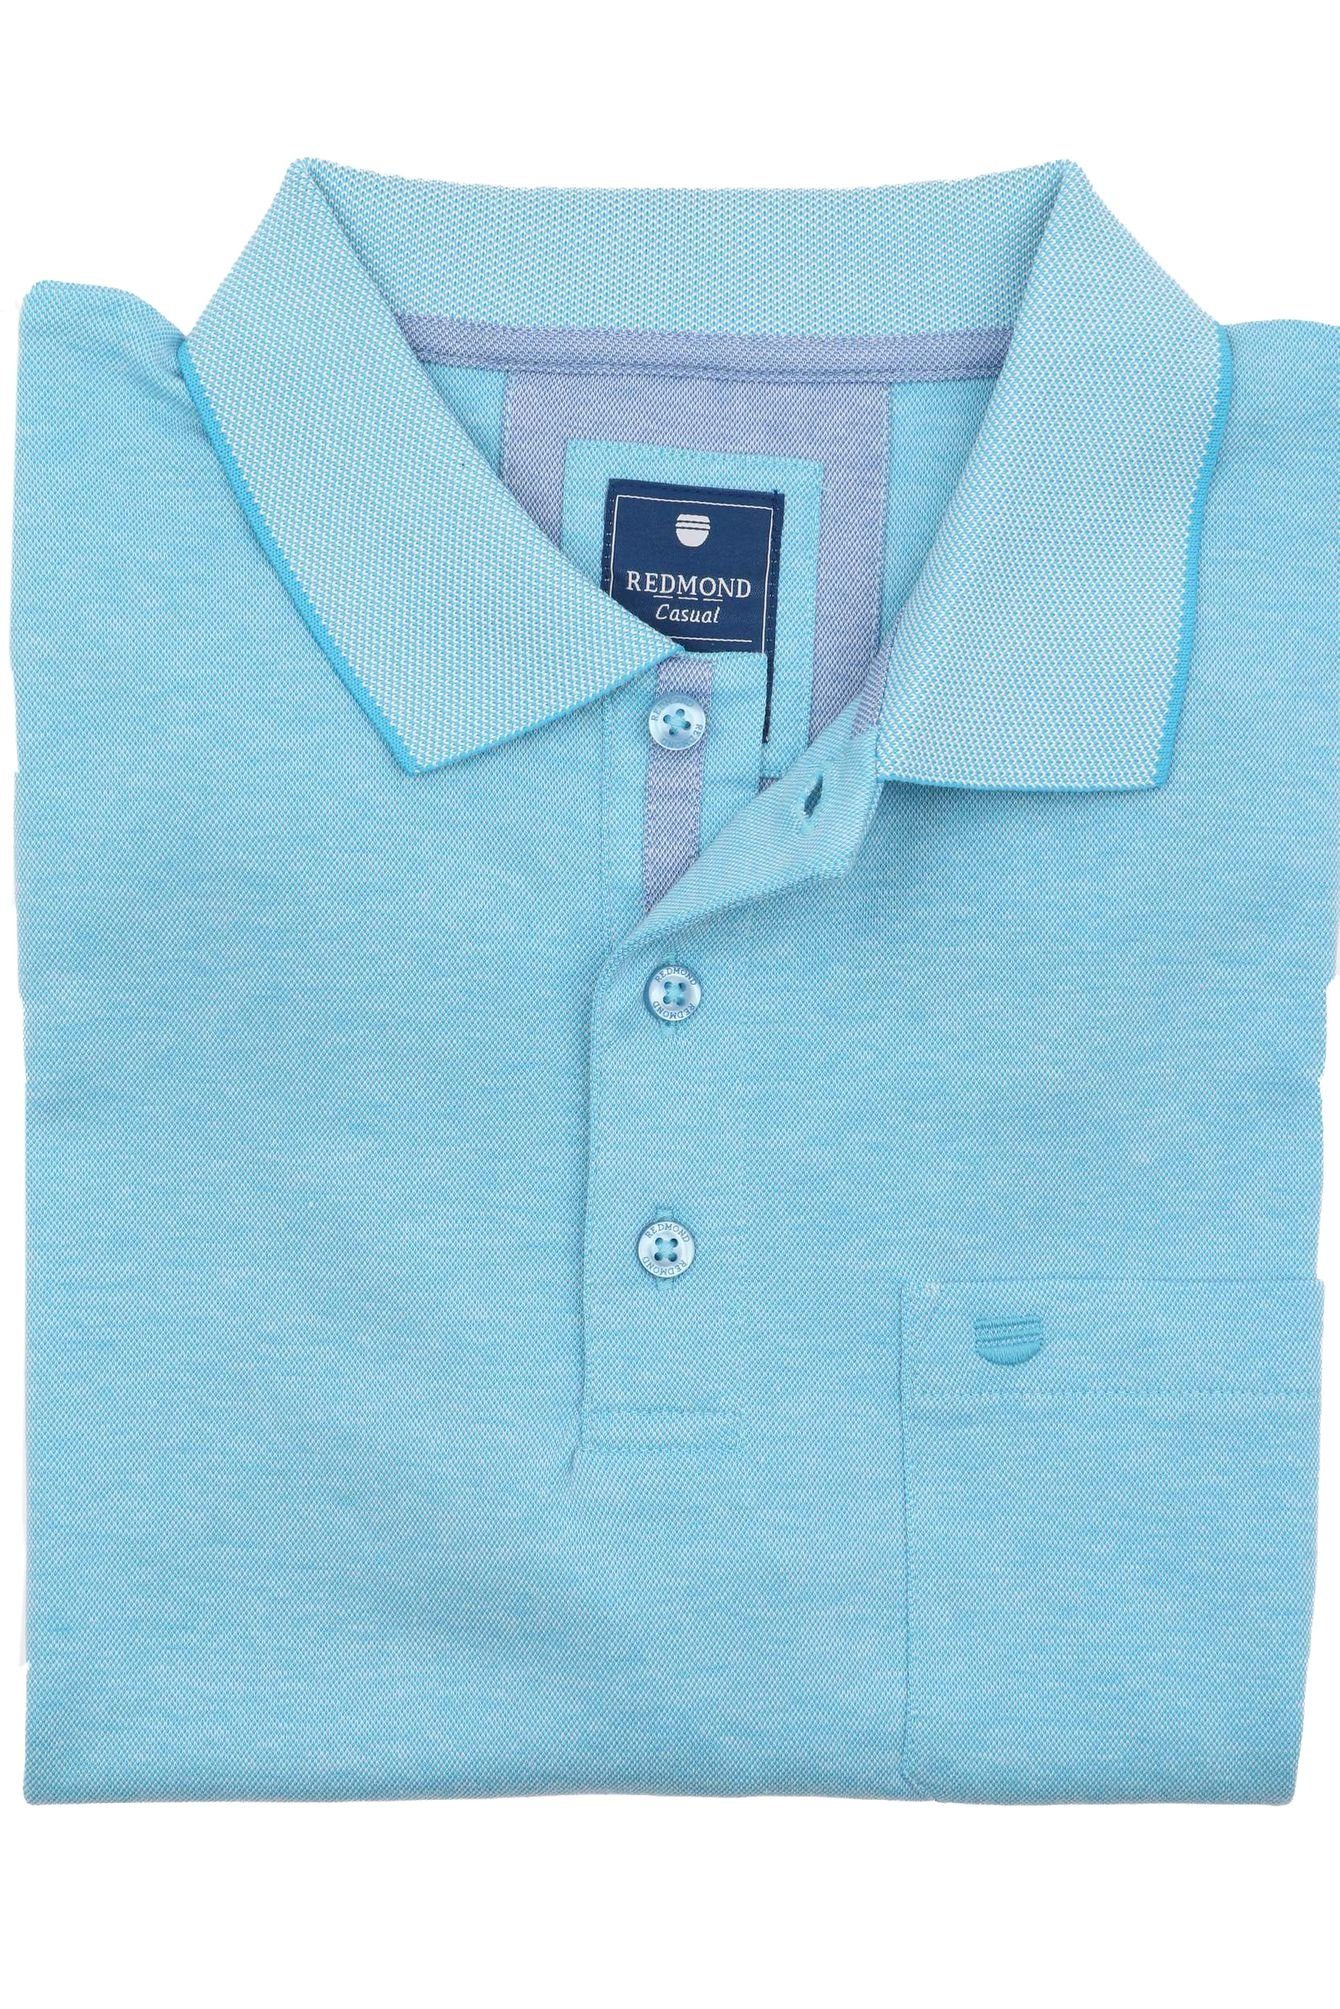 (15) Poloshirt Poloshirt Blau Redmond